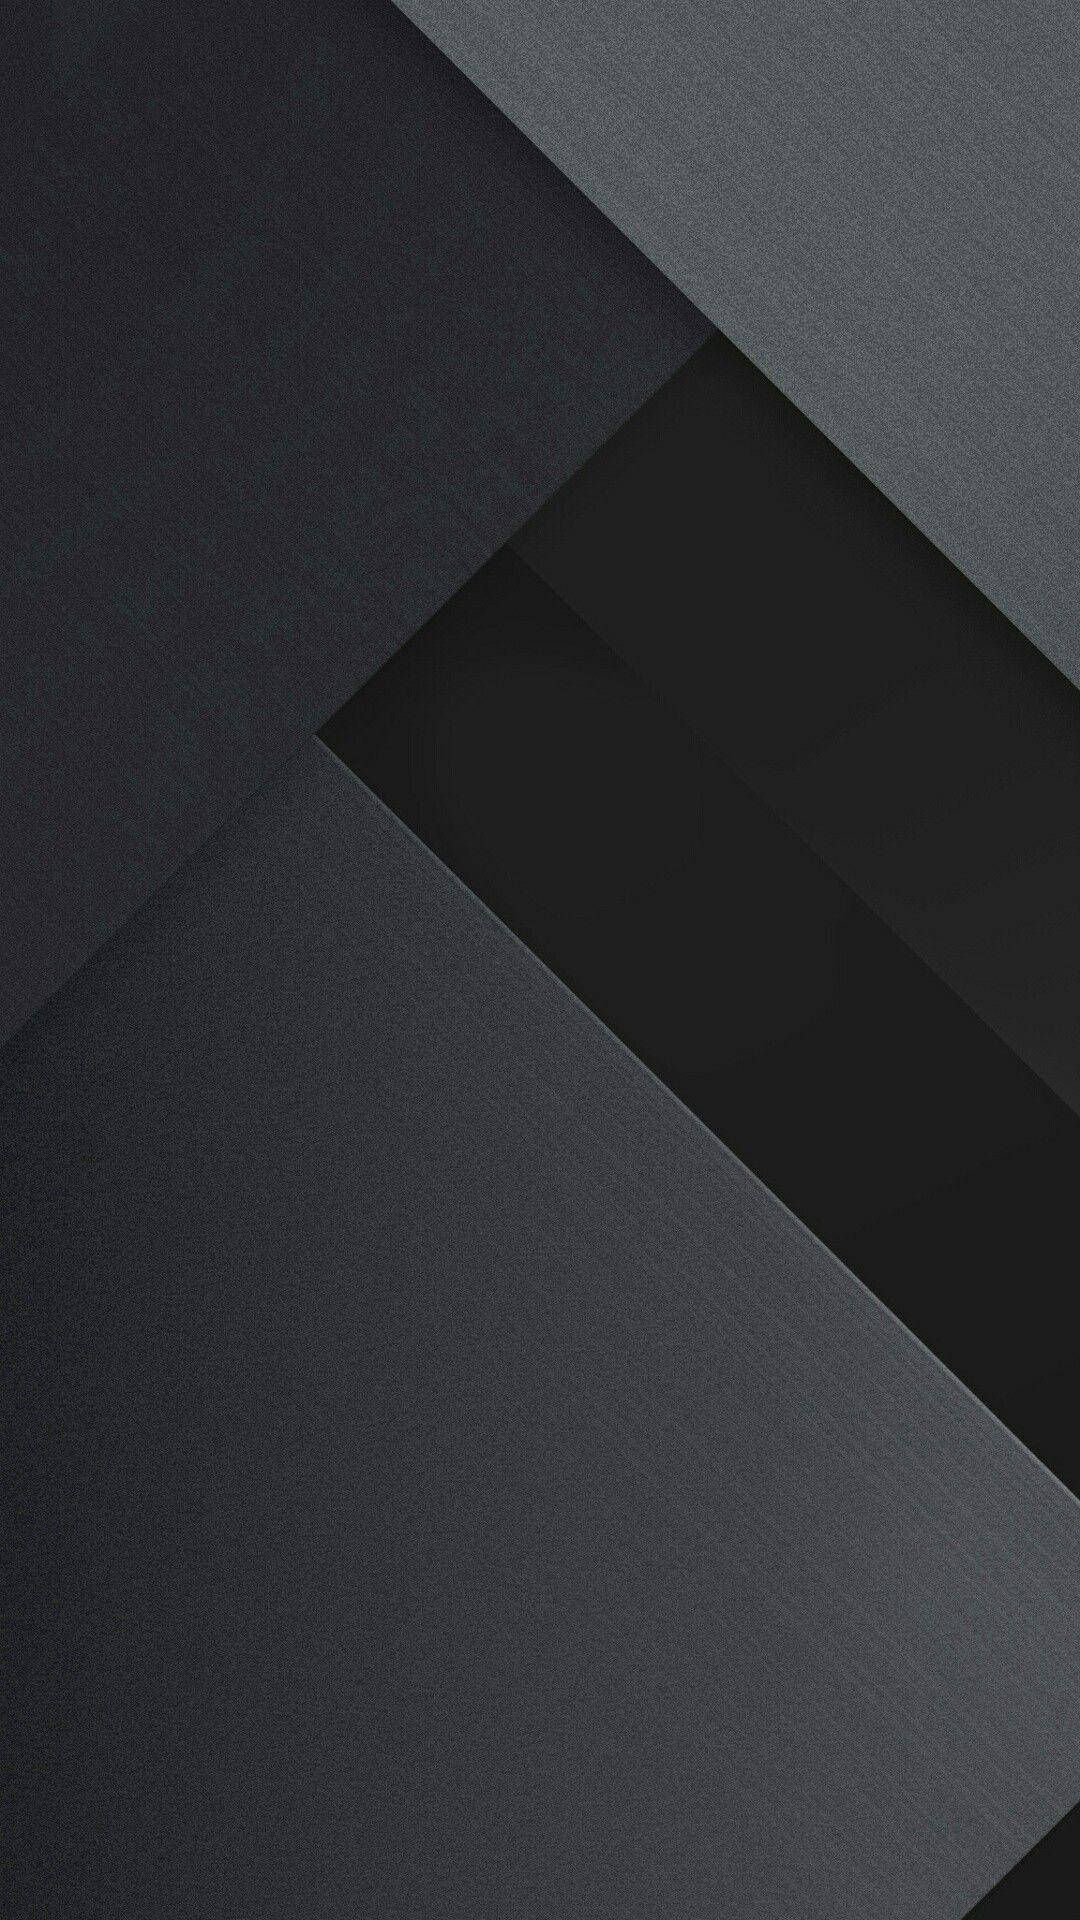 Geometric Black And Grey Iphone